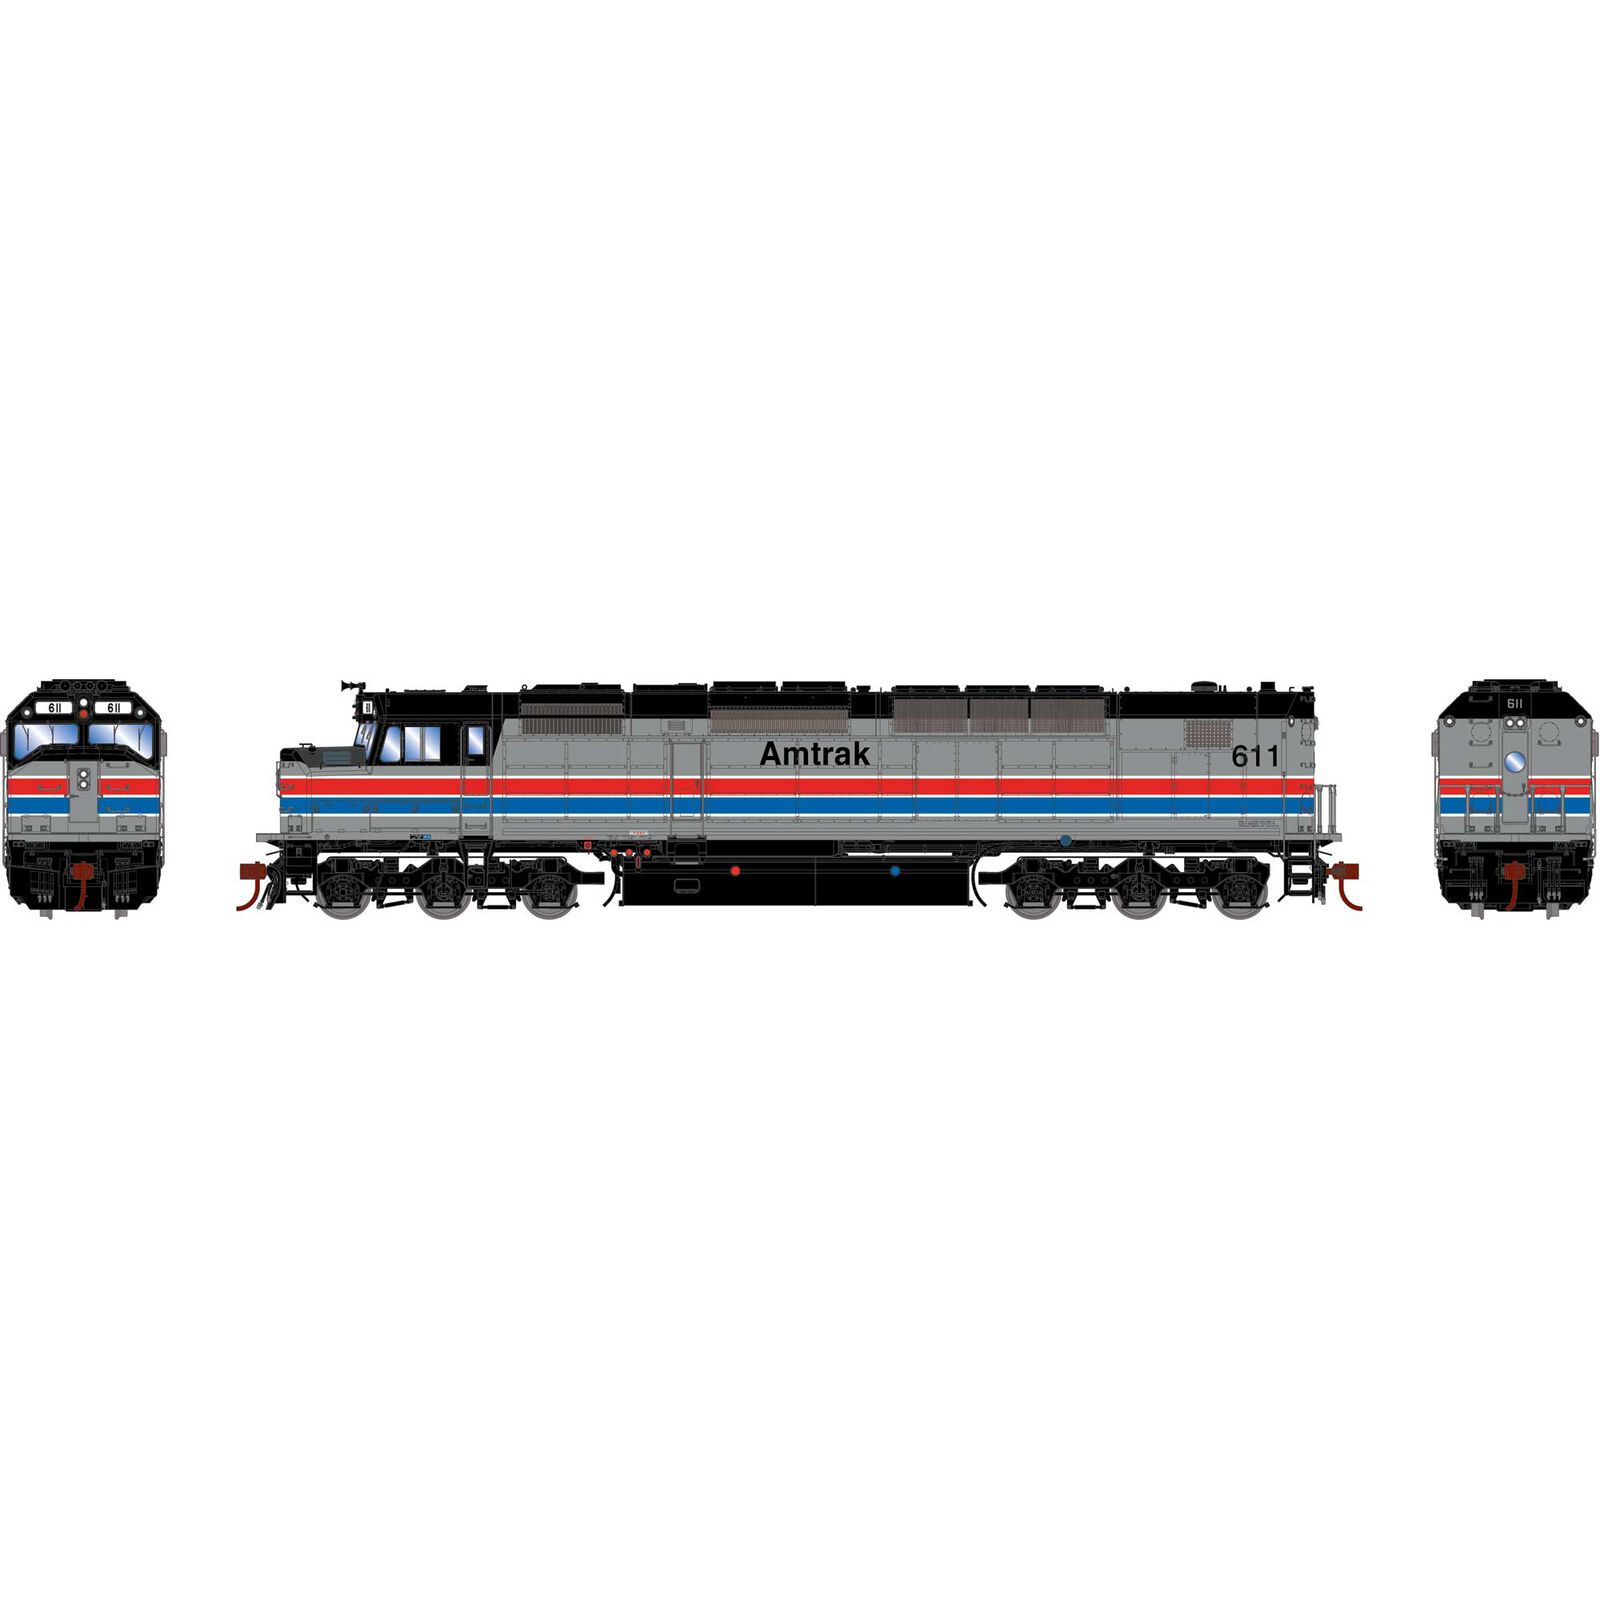 HO SDP40F Locomotive with DCC & Sound, Amtrak, Phase II #611